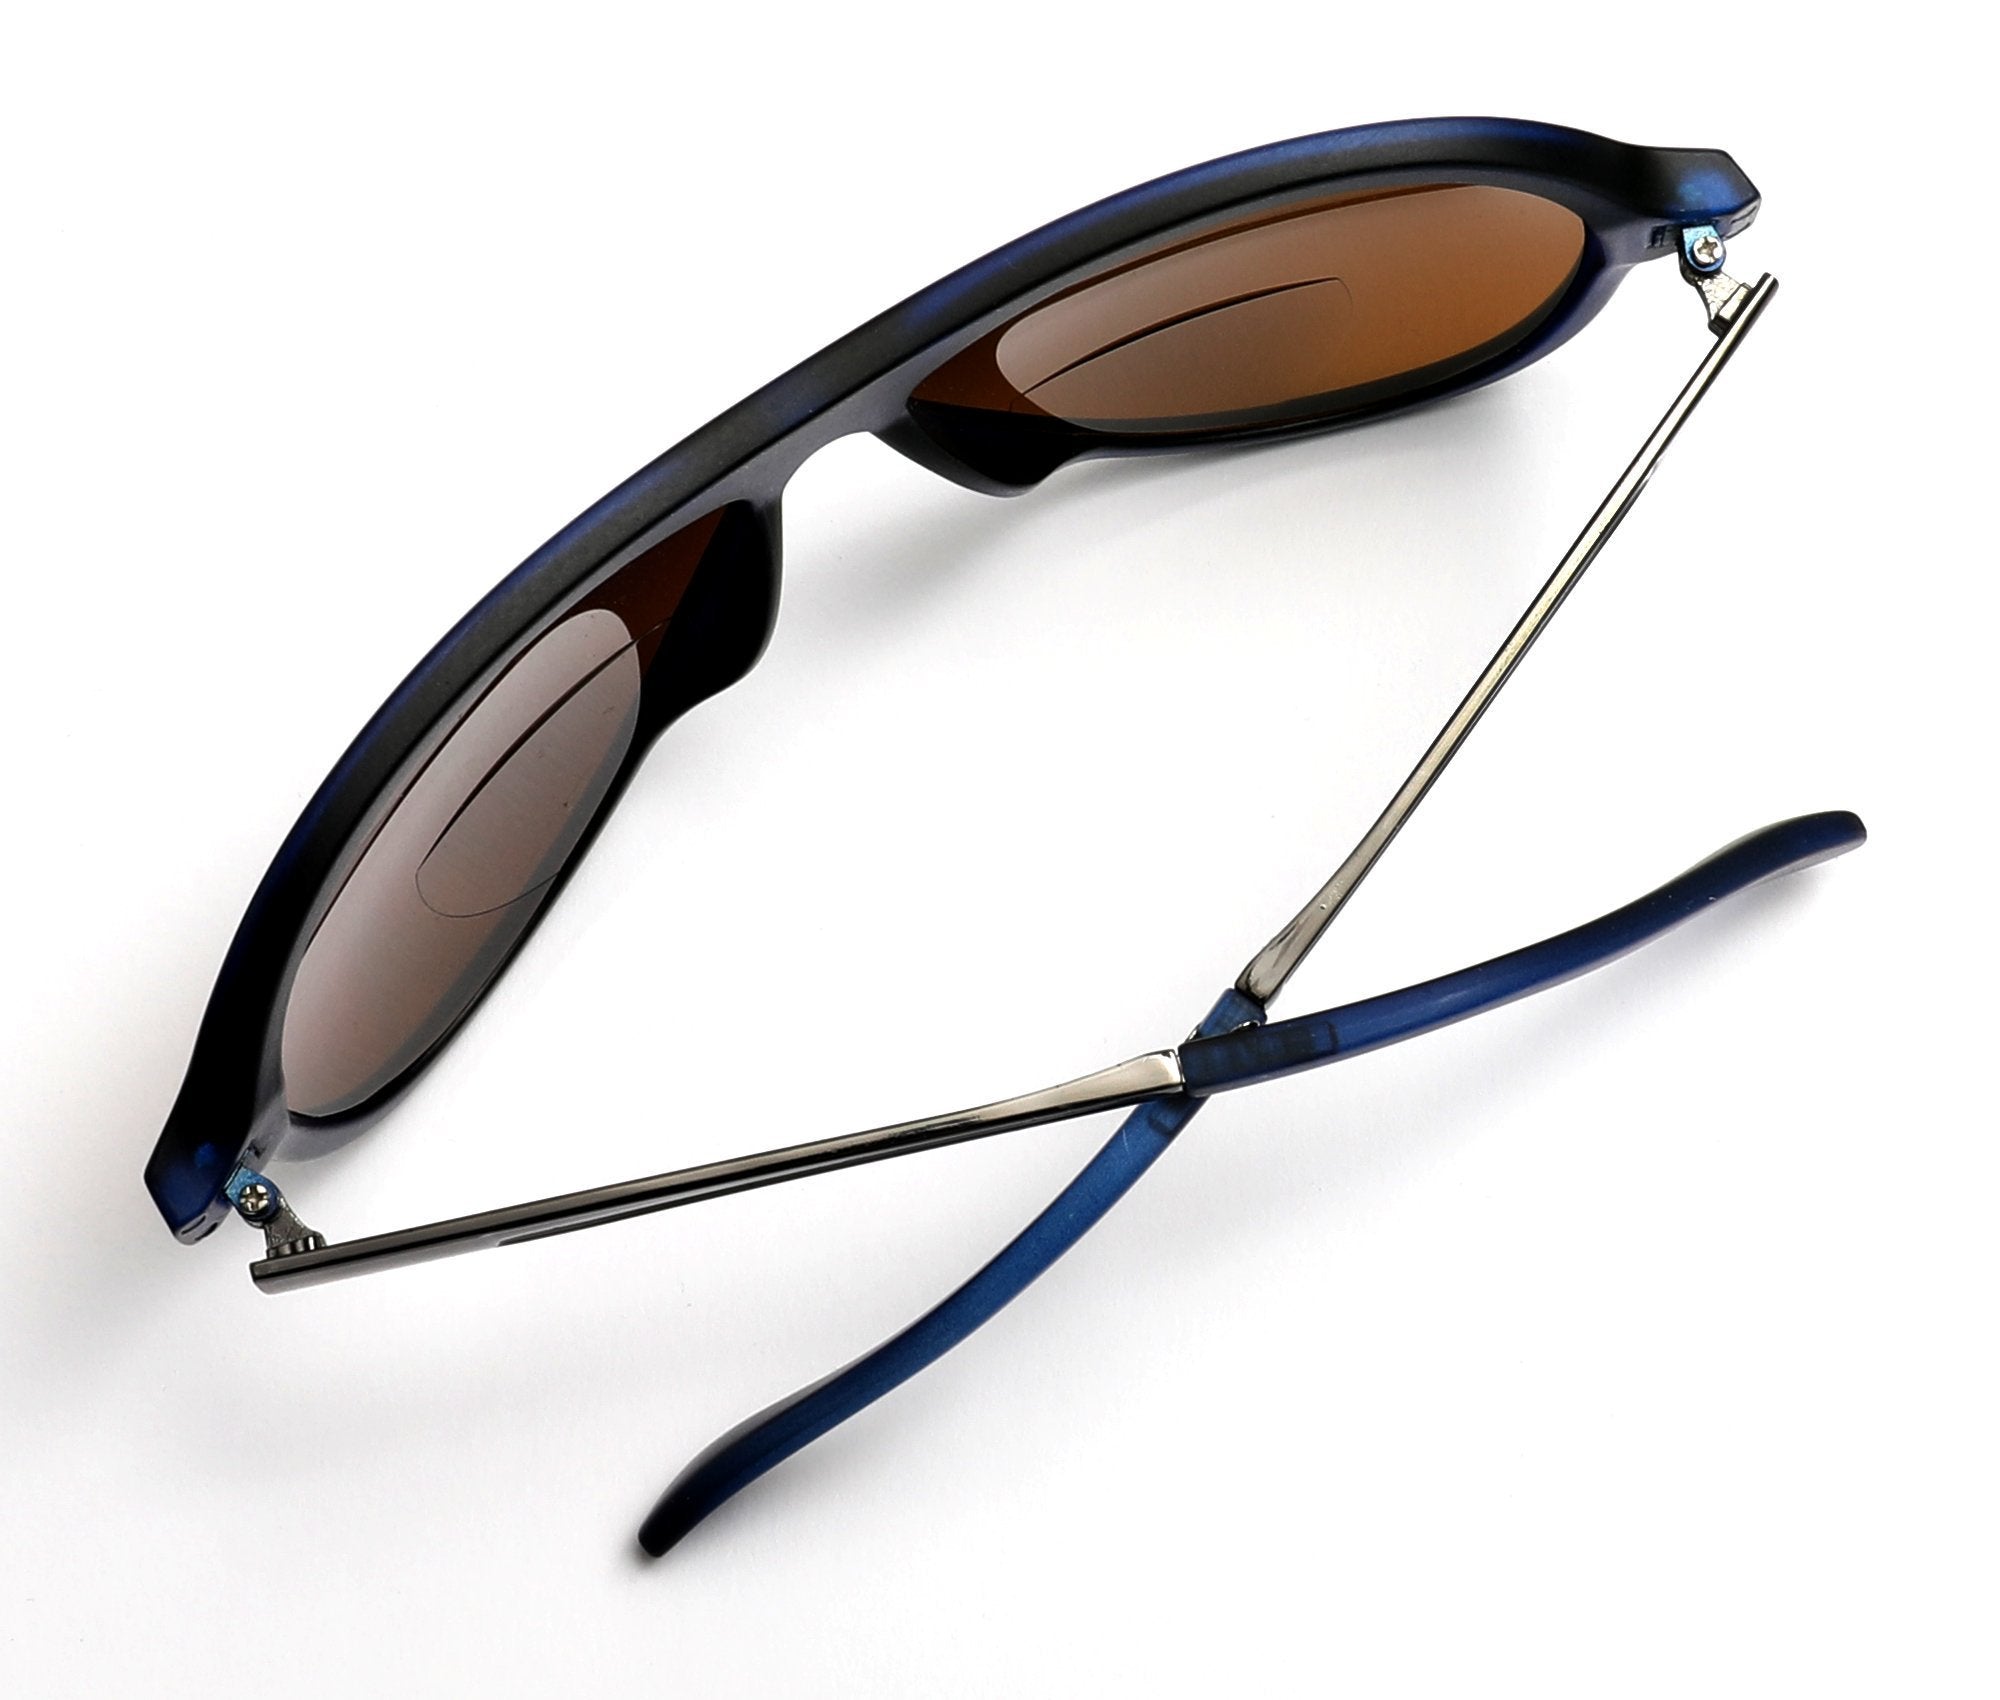 Bi-Focal Sun Readers Pilot Military Cool Factor Sunshade Sunglasses Matte Blue-Samba Shades